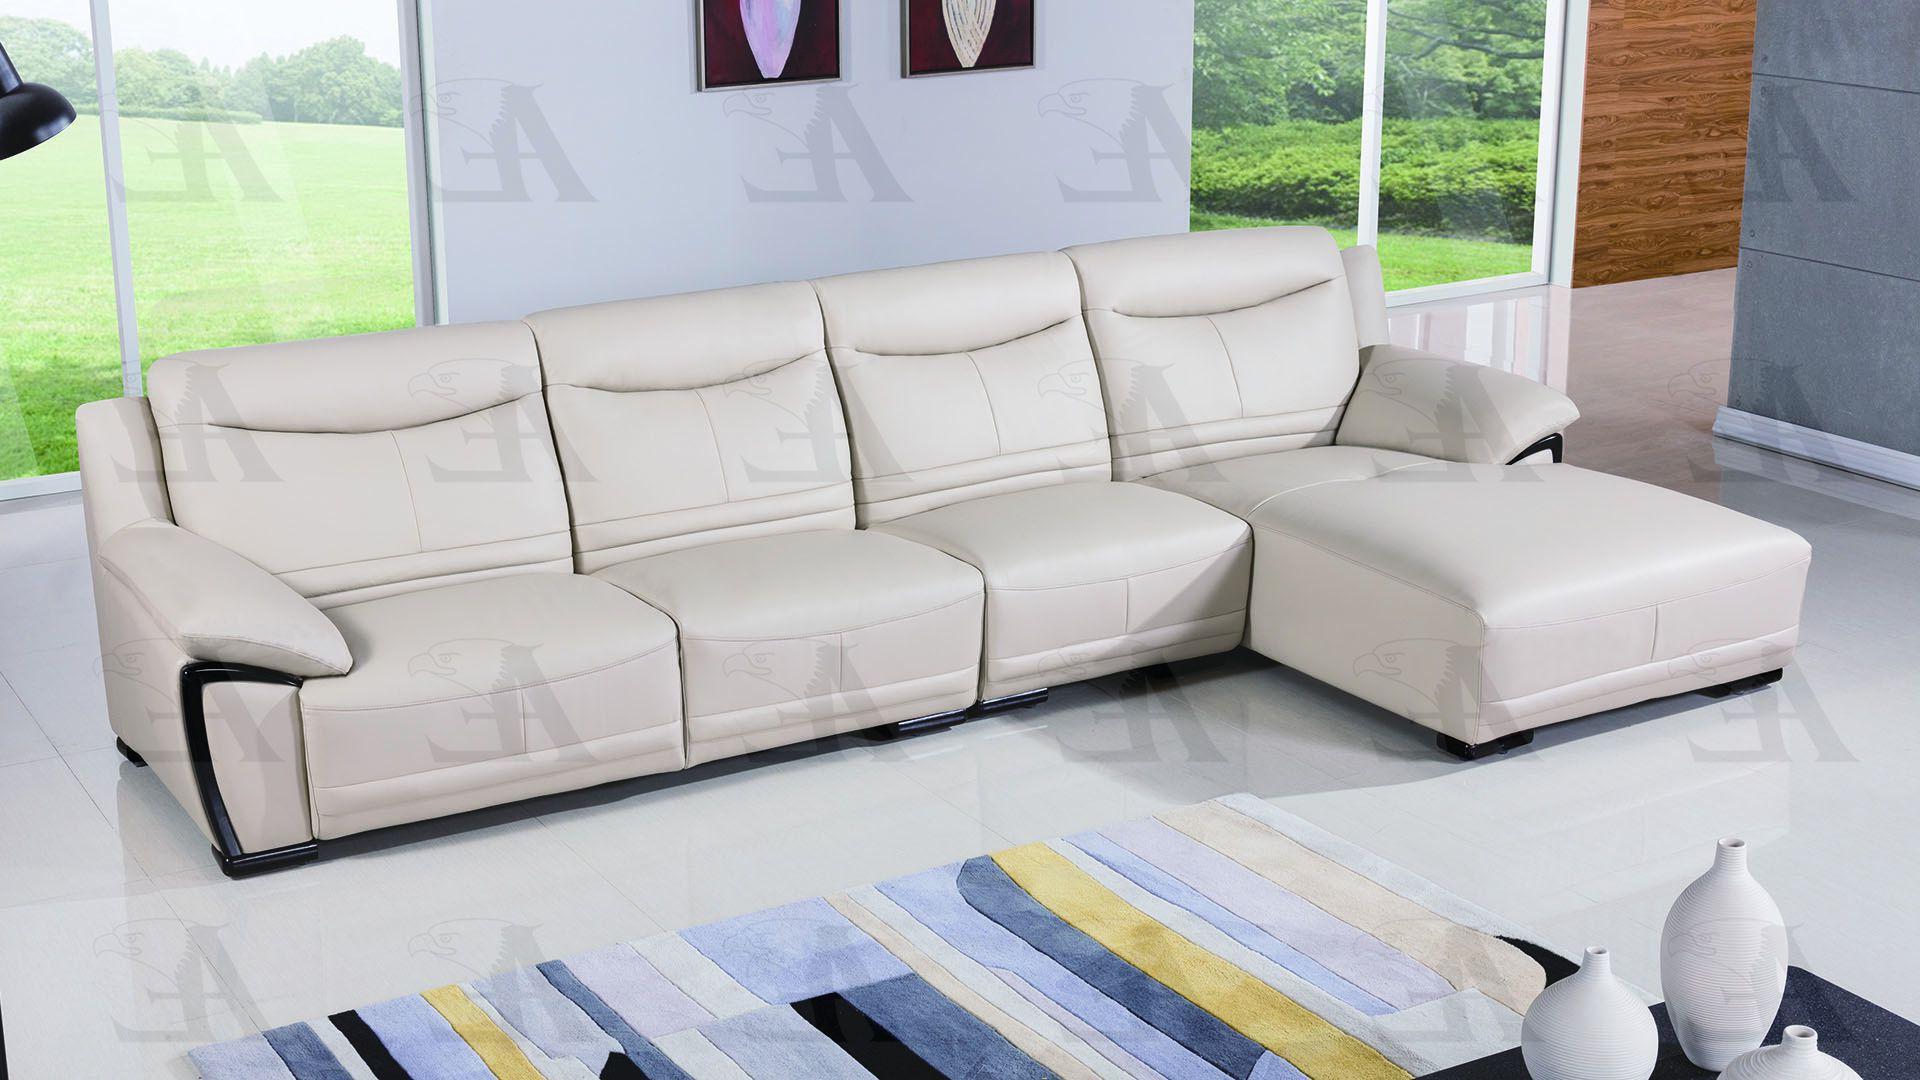 

    
American Eagle Furniture EK-LB306-LG Modern Light Gray Genuine Leather Sectional RHC 3Pcs
